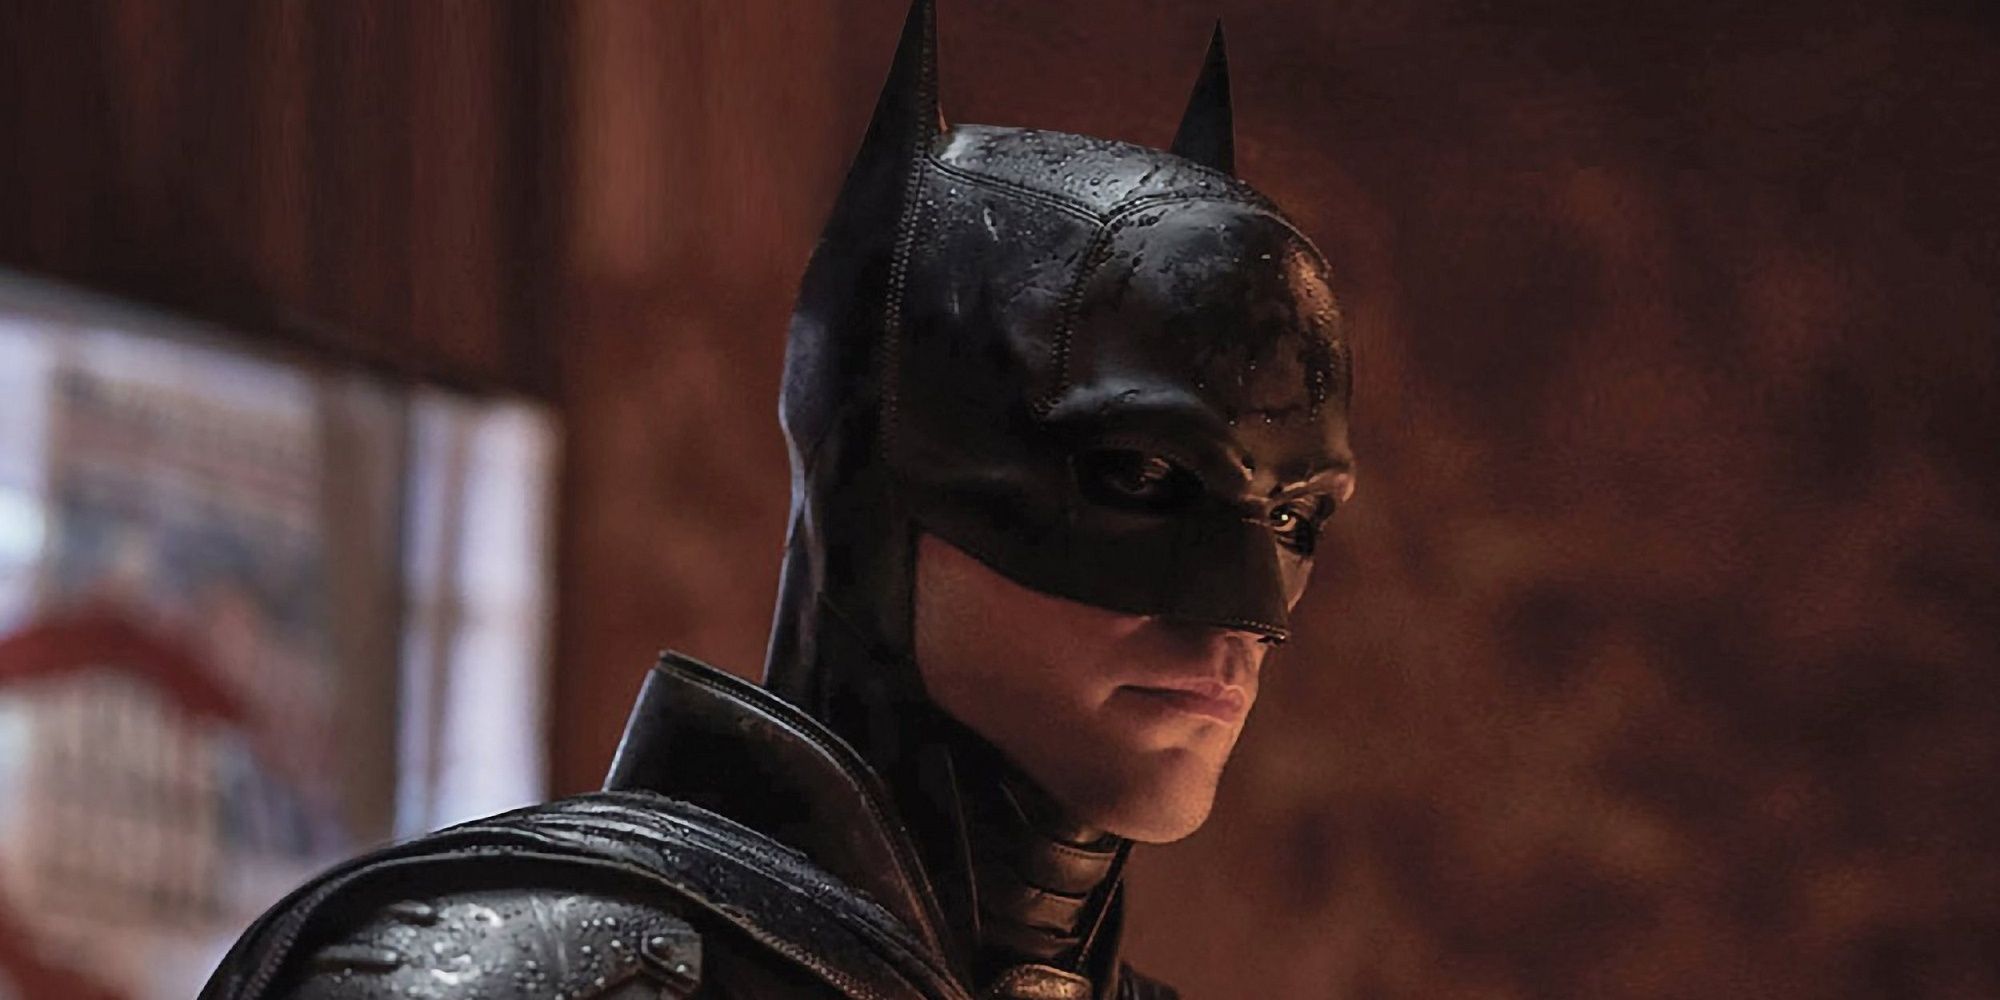 Robert Pattinson as Batman looking intently in The Batman.